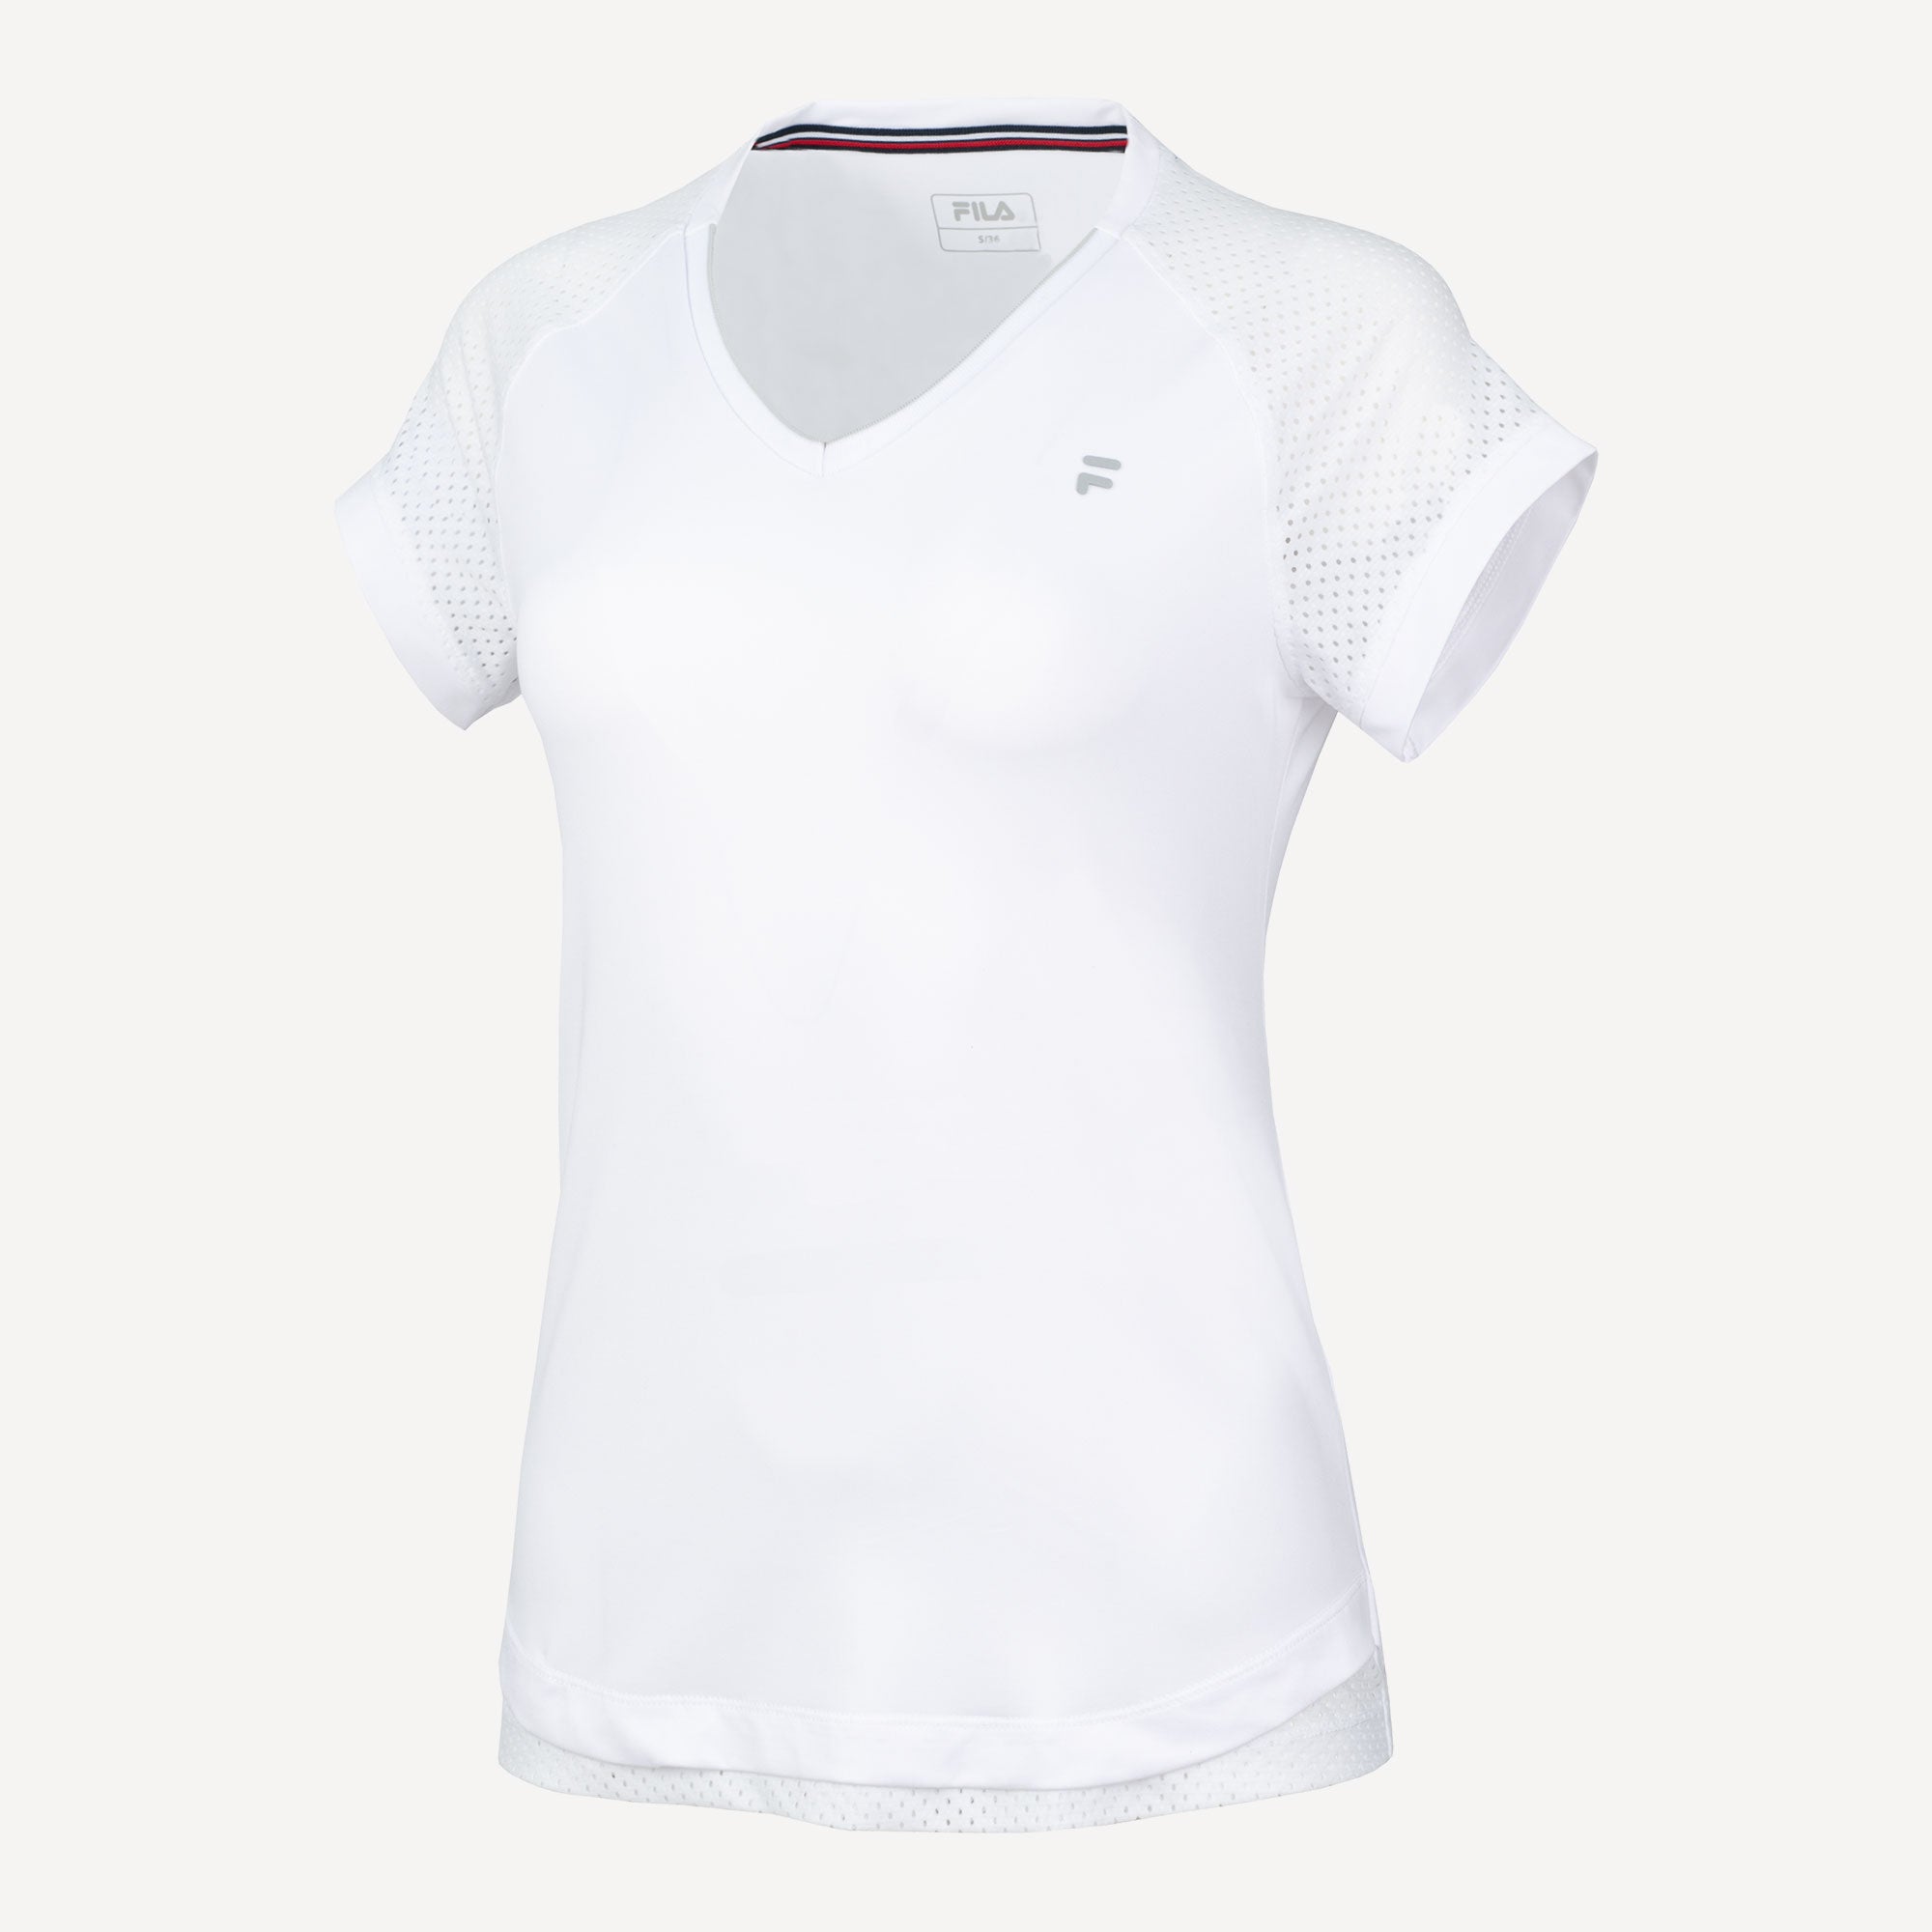 Fila Johanna Women's Tennis Shirt White (1)